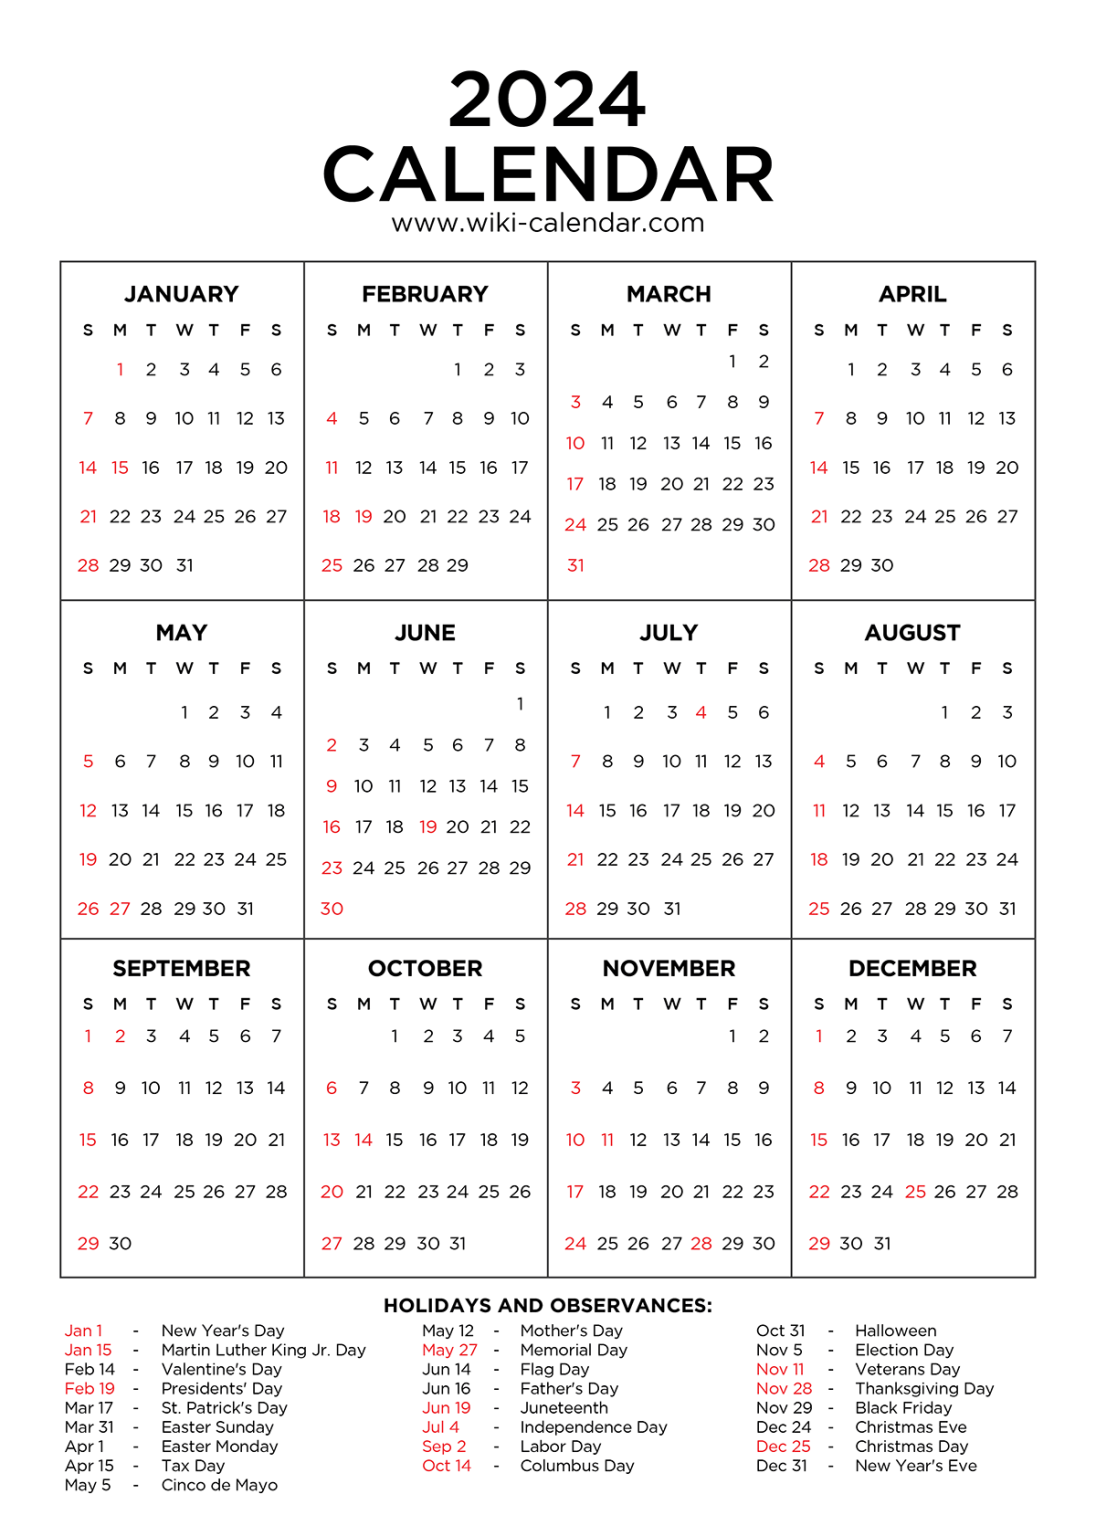 Year 2024 Calendar Printable With Holidays Wiki Calendar - Free Printable 2024 Calendar With Us Holidays